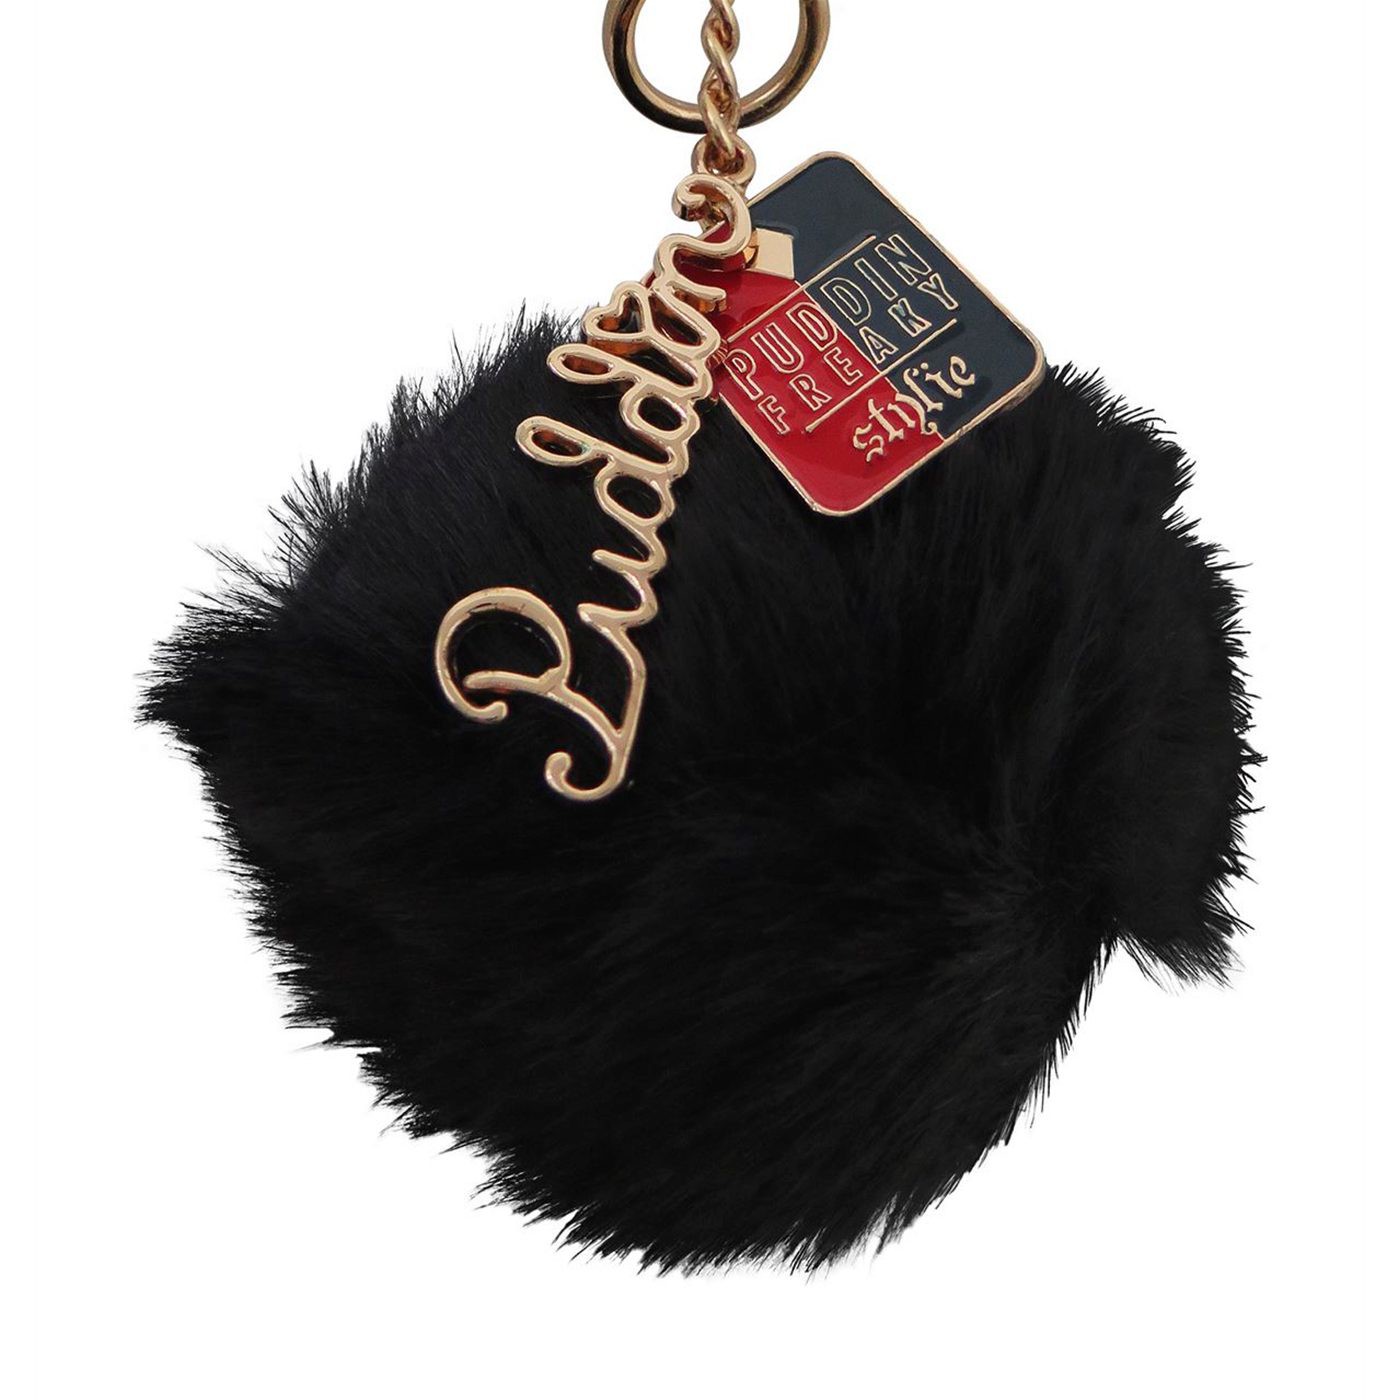 Harley Quinn Puddin' Pom Pom Handbag Charm Keychain